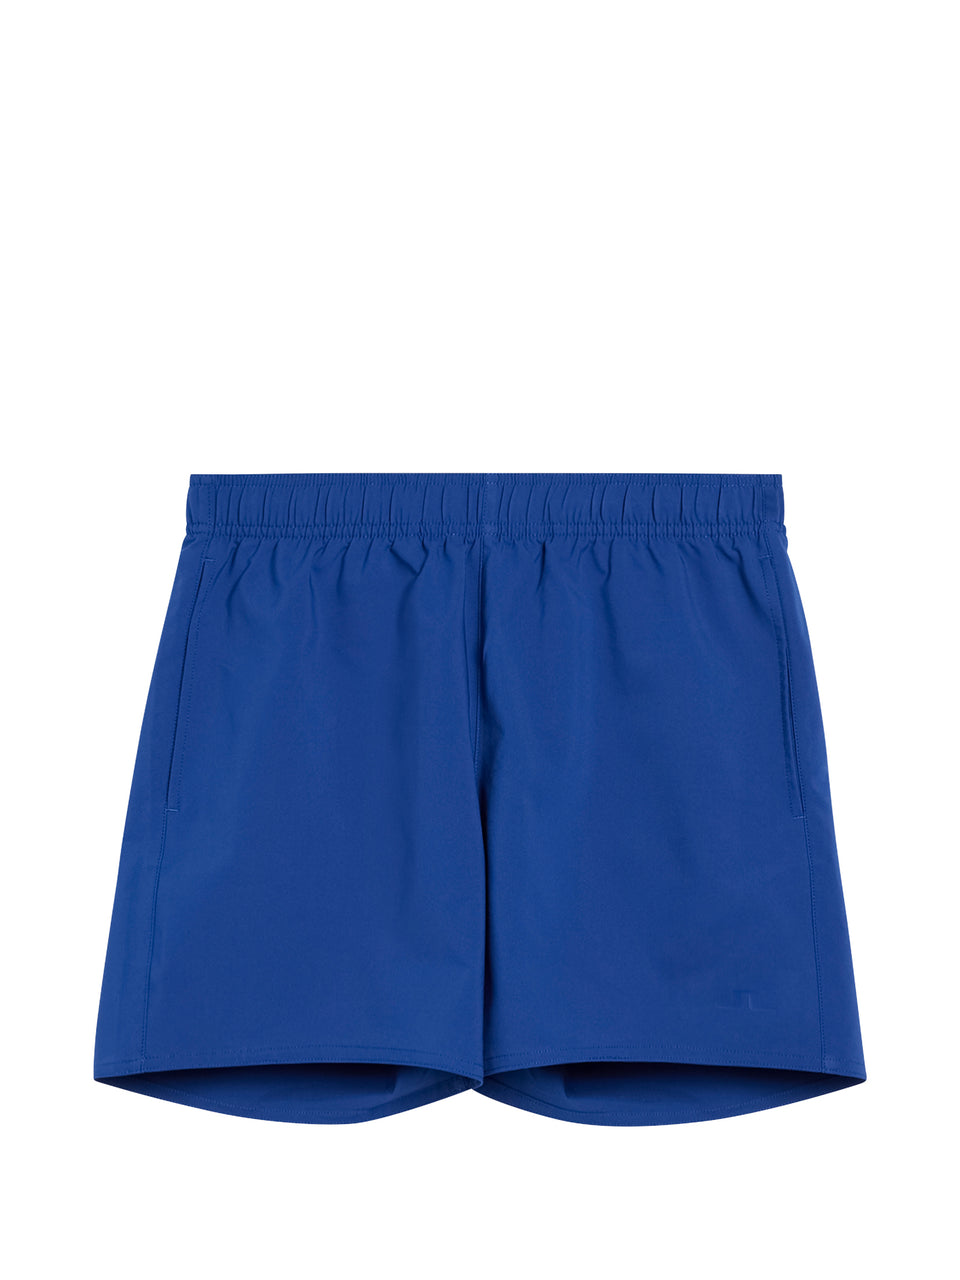 Preston Shorts / Sodalite Blue